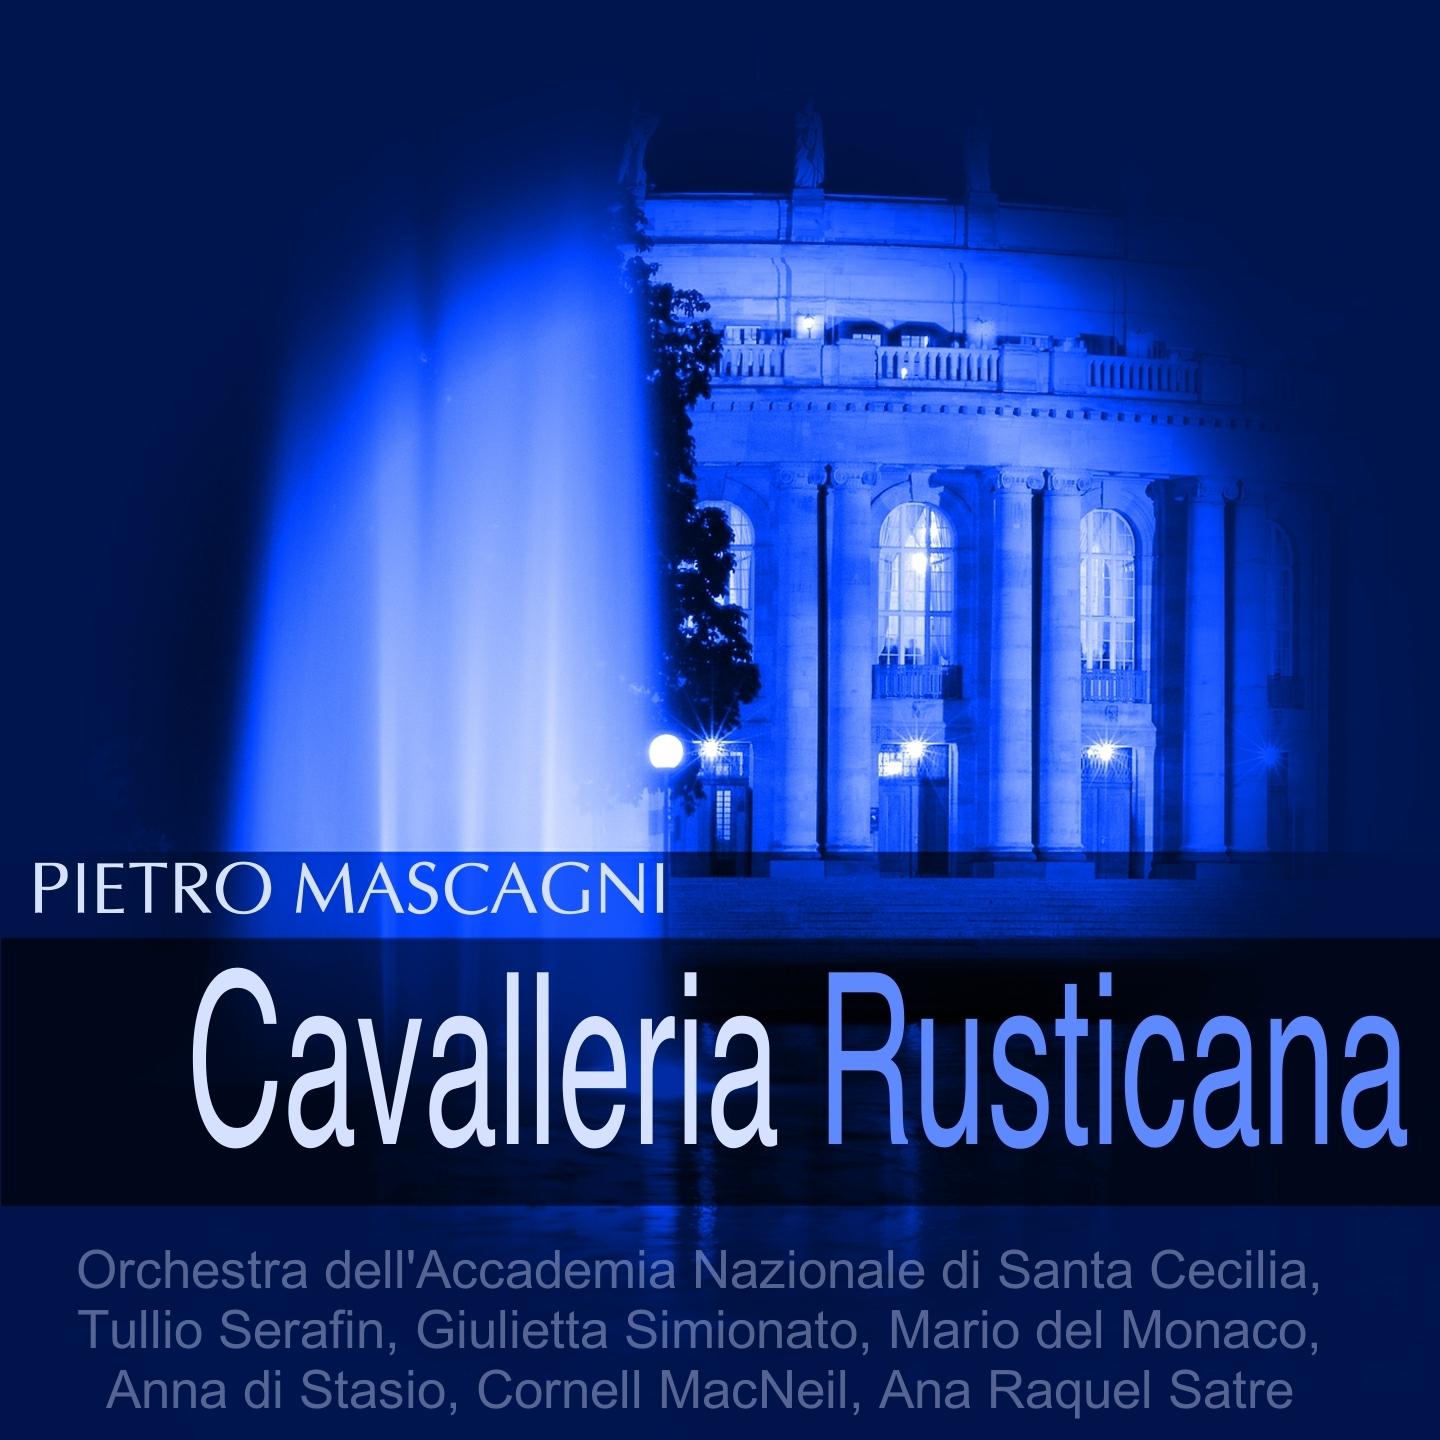 Cavalleria rusticana: Intermezzo